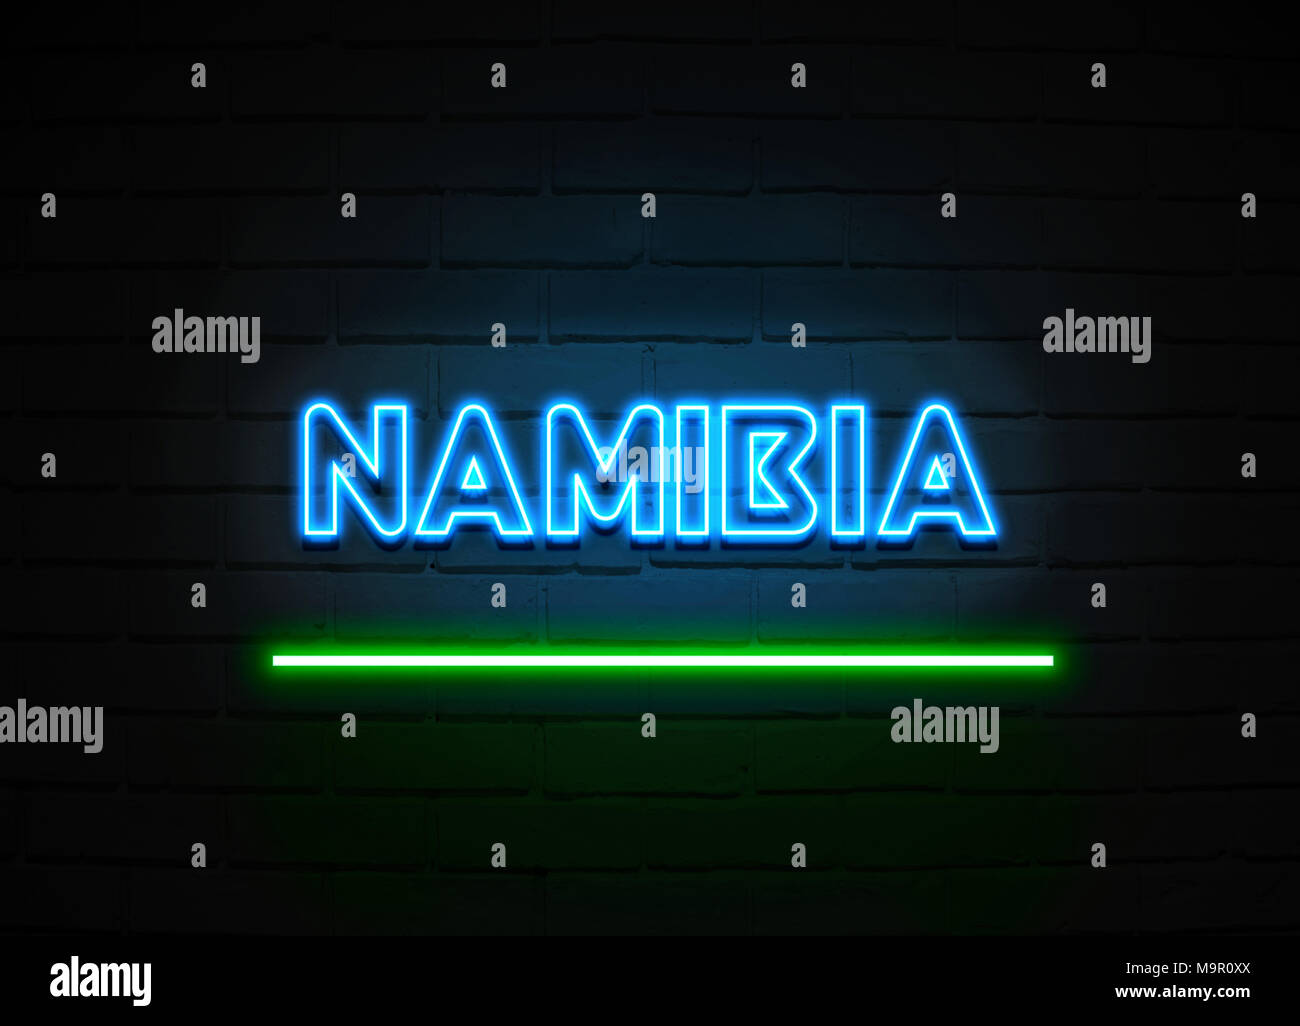 Namibia Leuchtreklame - glühende Leuchtreklame auf brickwall Wand - 3D-Royalty Free Stock Illustration dargestellt. Stockfoto